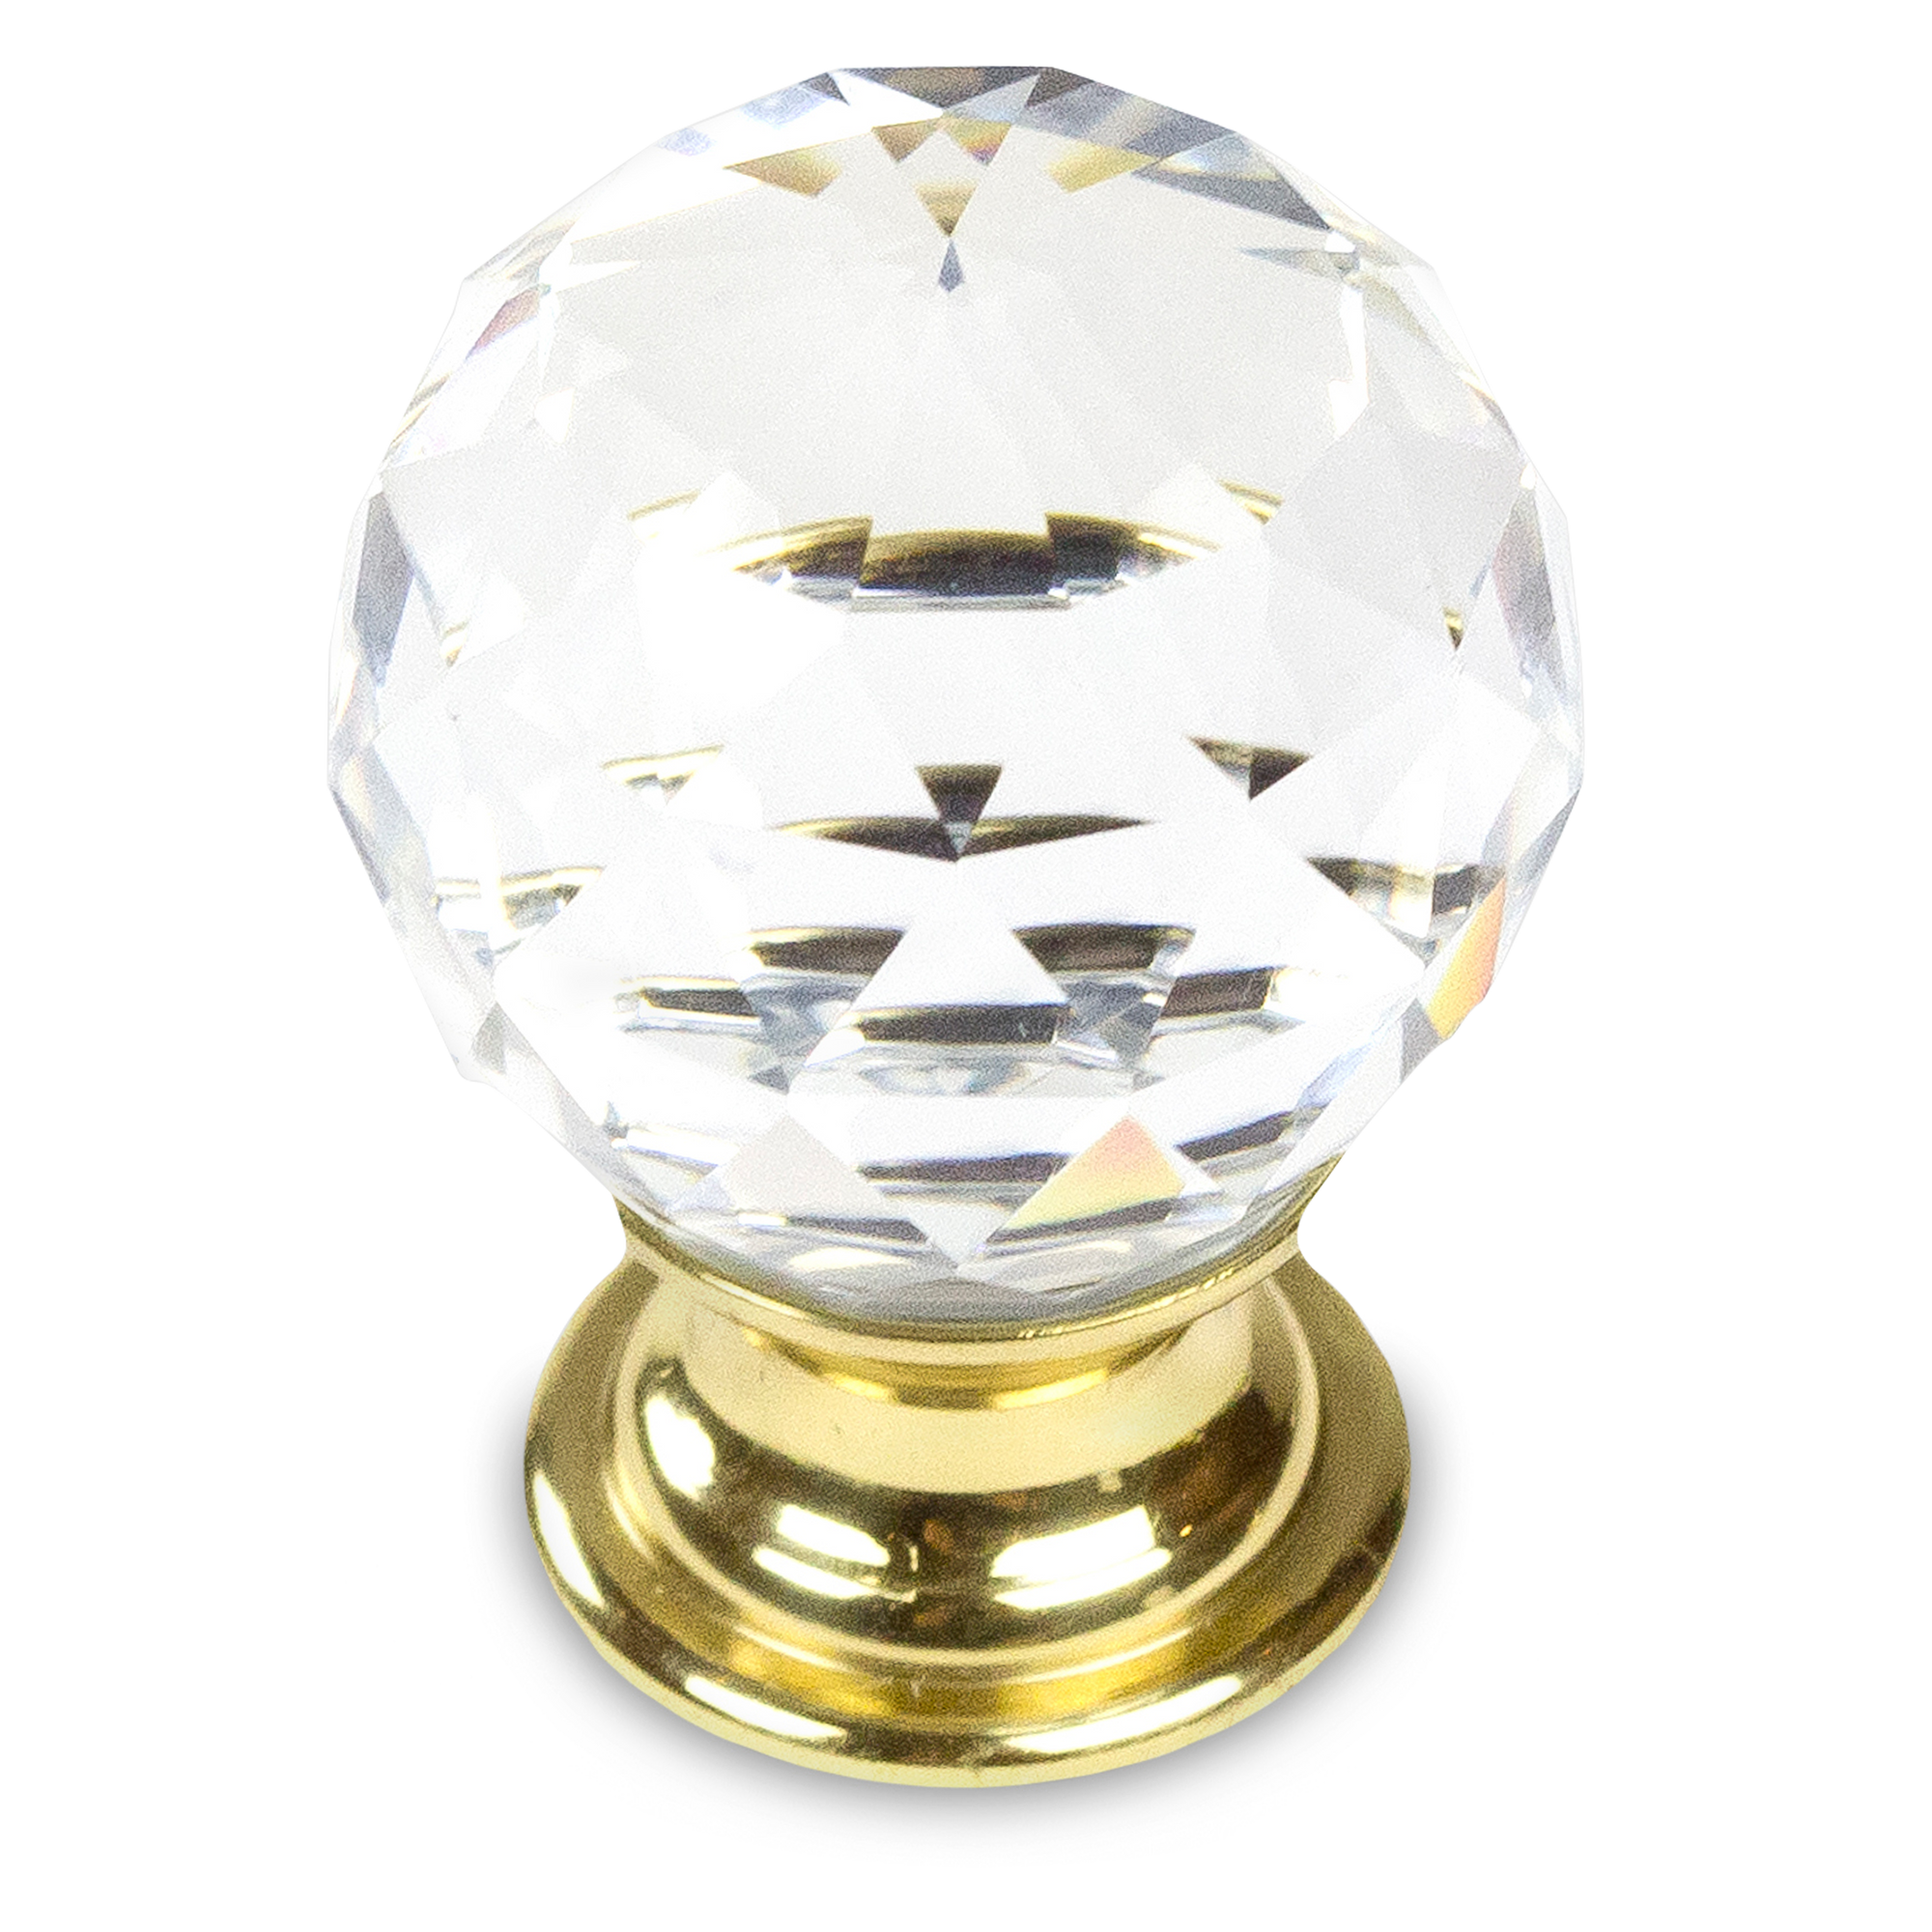 A glamorous traditional crystal knob.